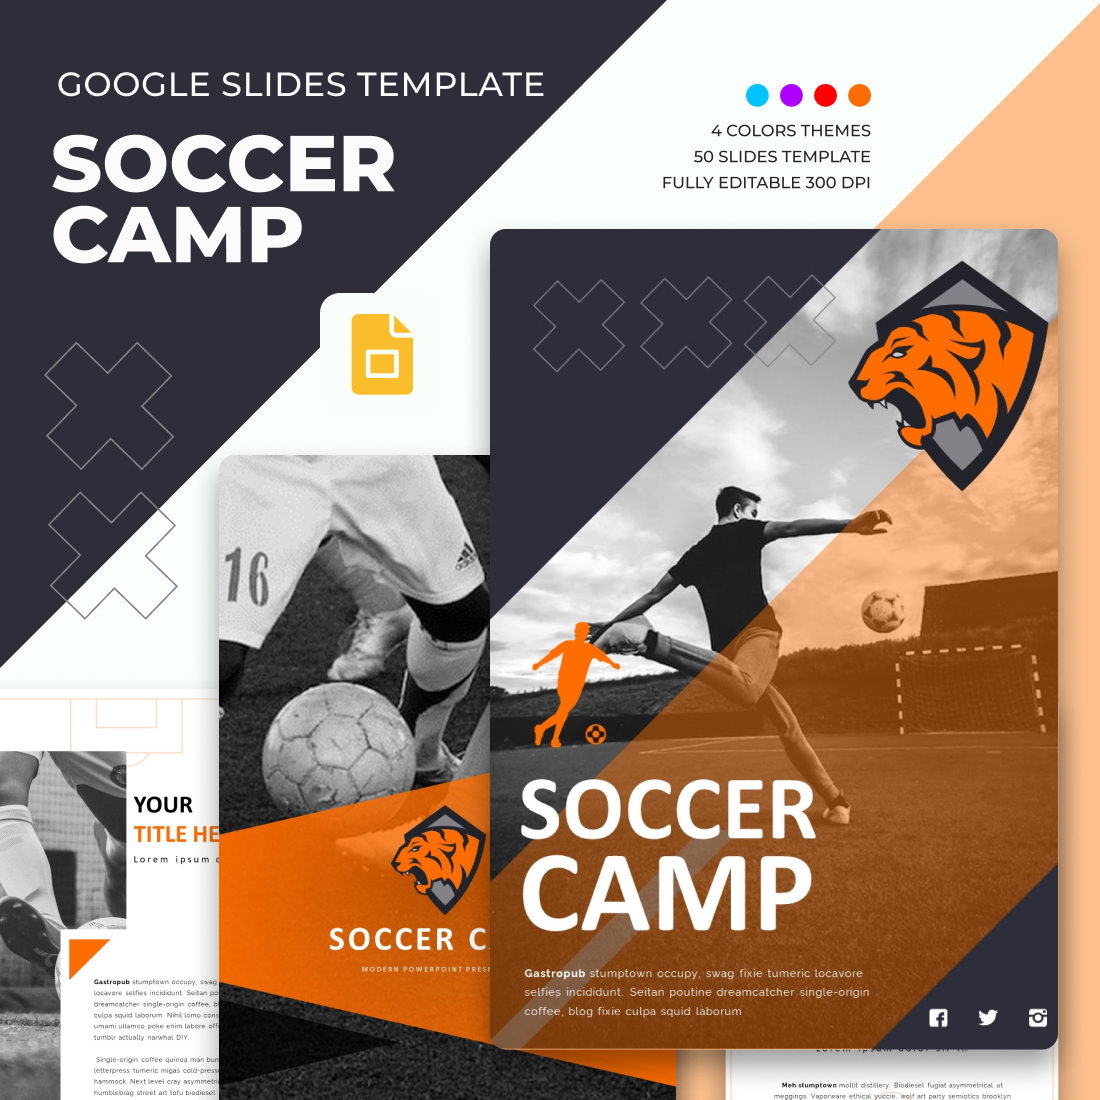 Preview soccercamp google slides template.